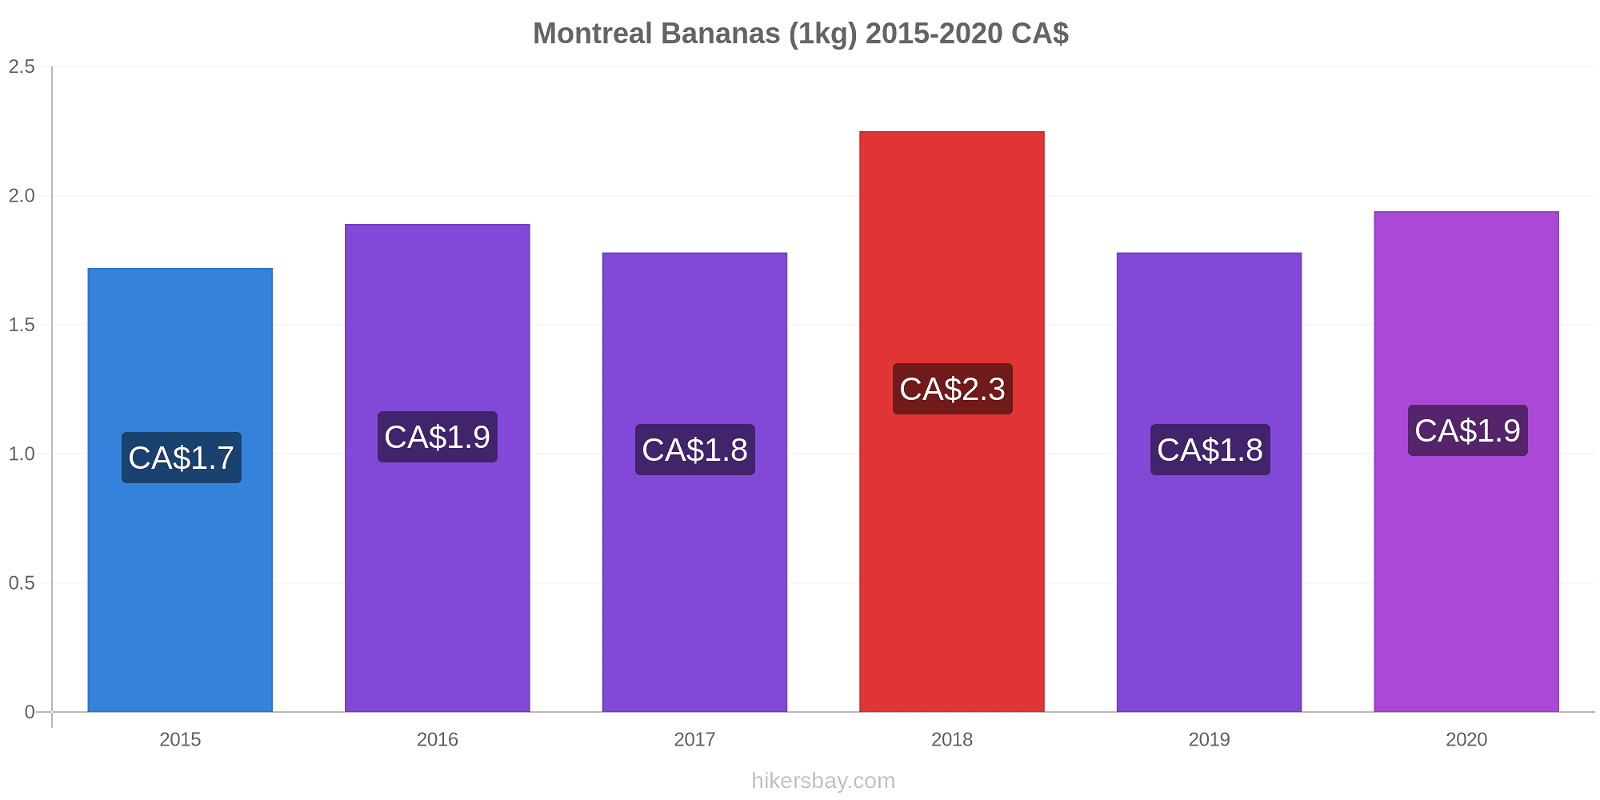 Montreal price changes Bananas (1kg) hikersbay.com